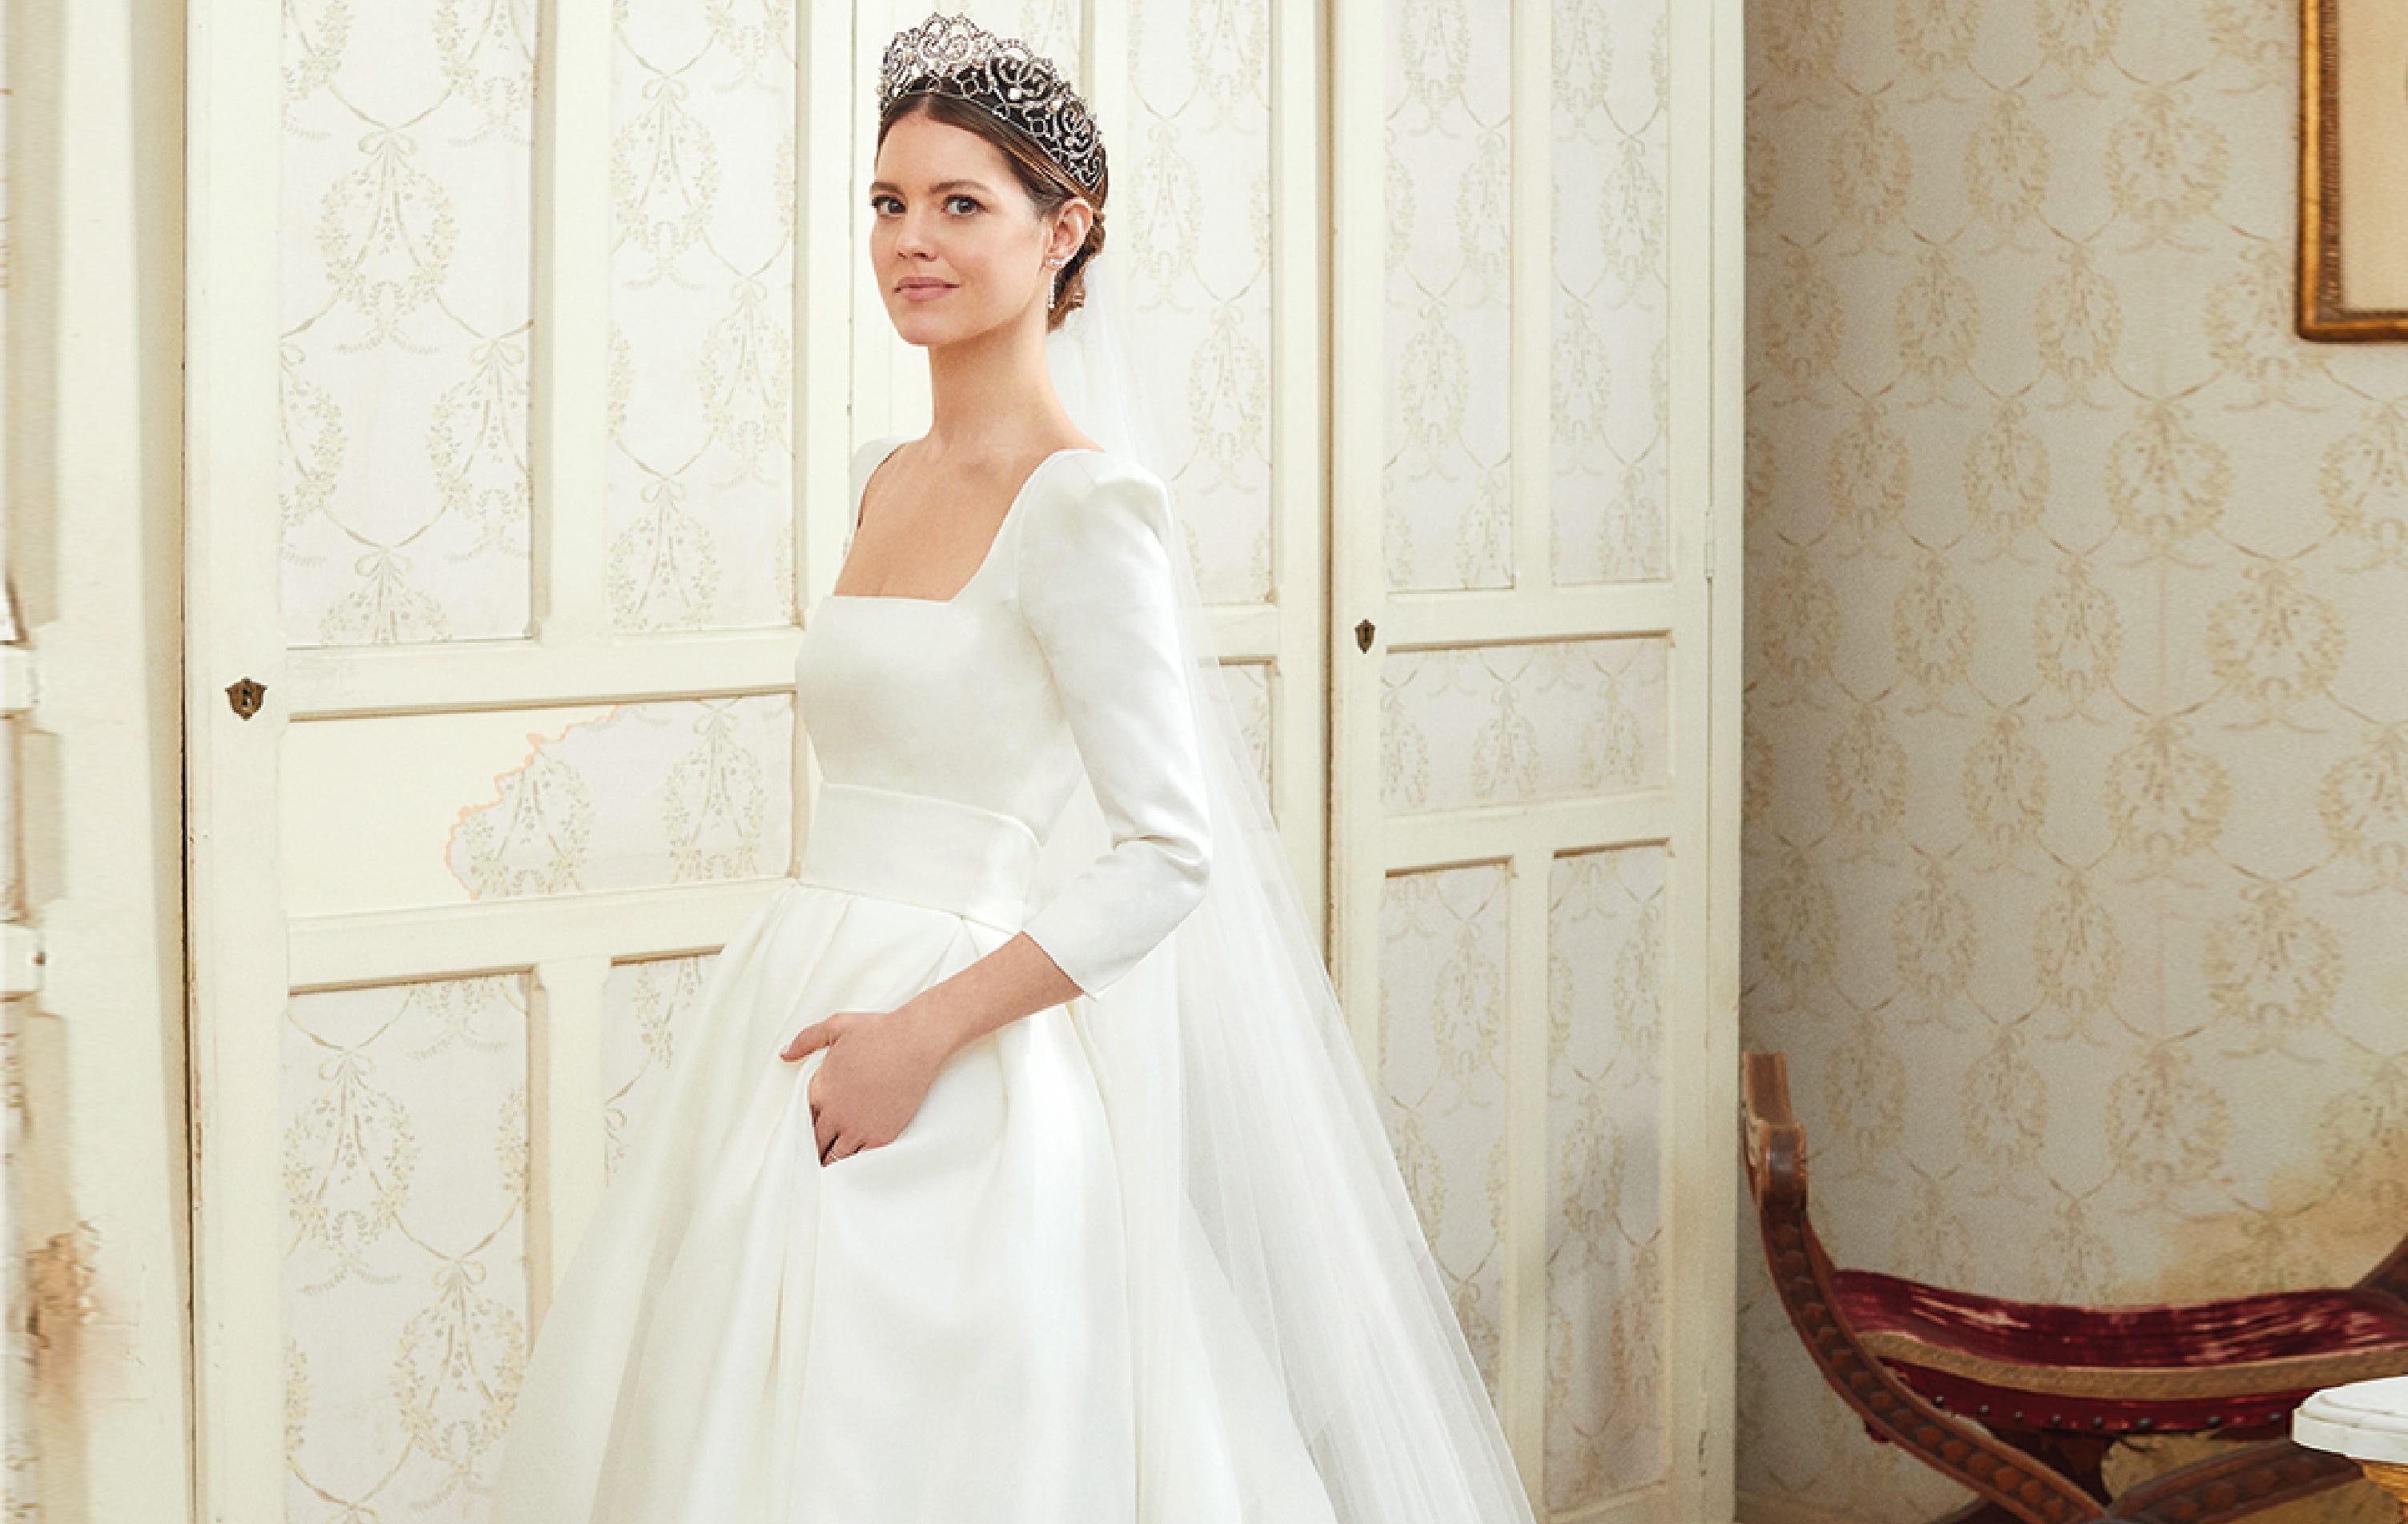 Royalty wedding dresses for elegant brides   